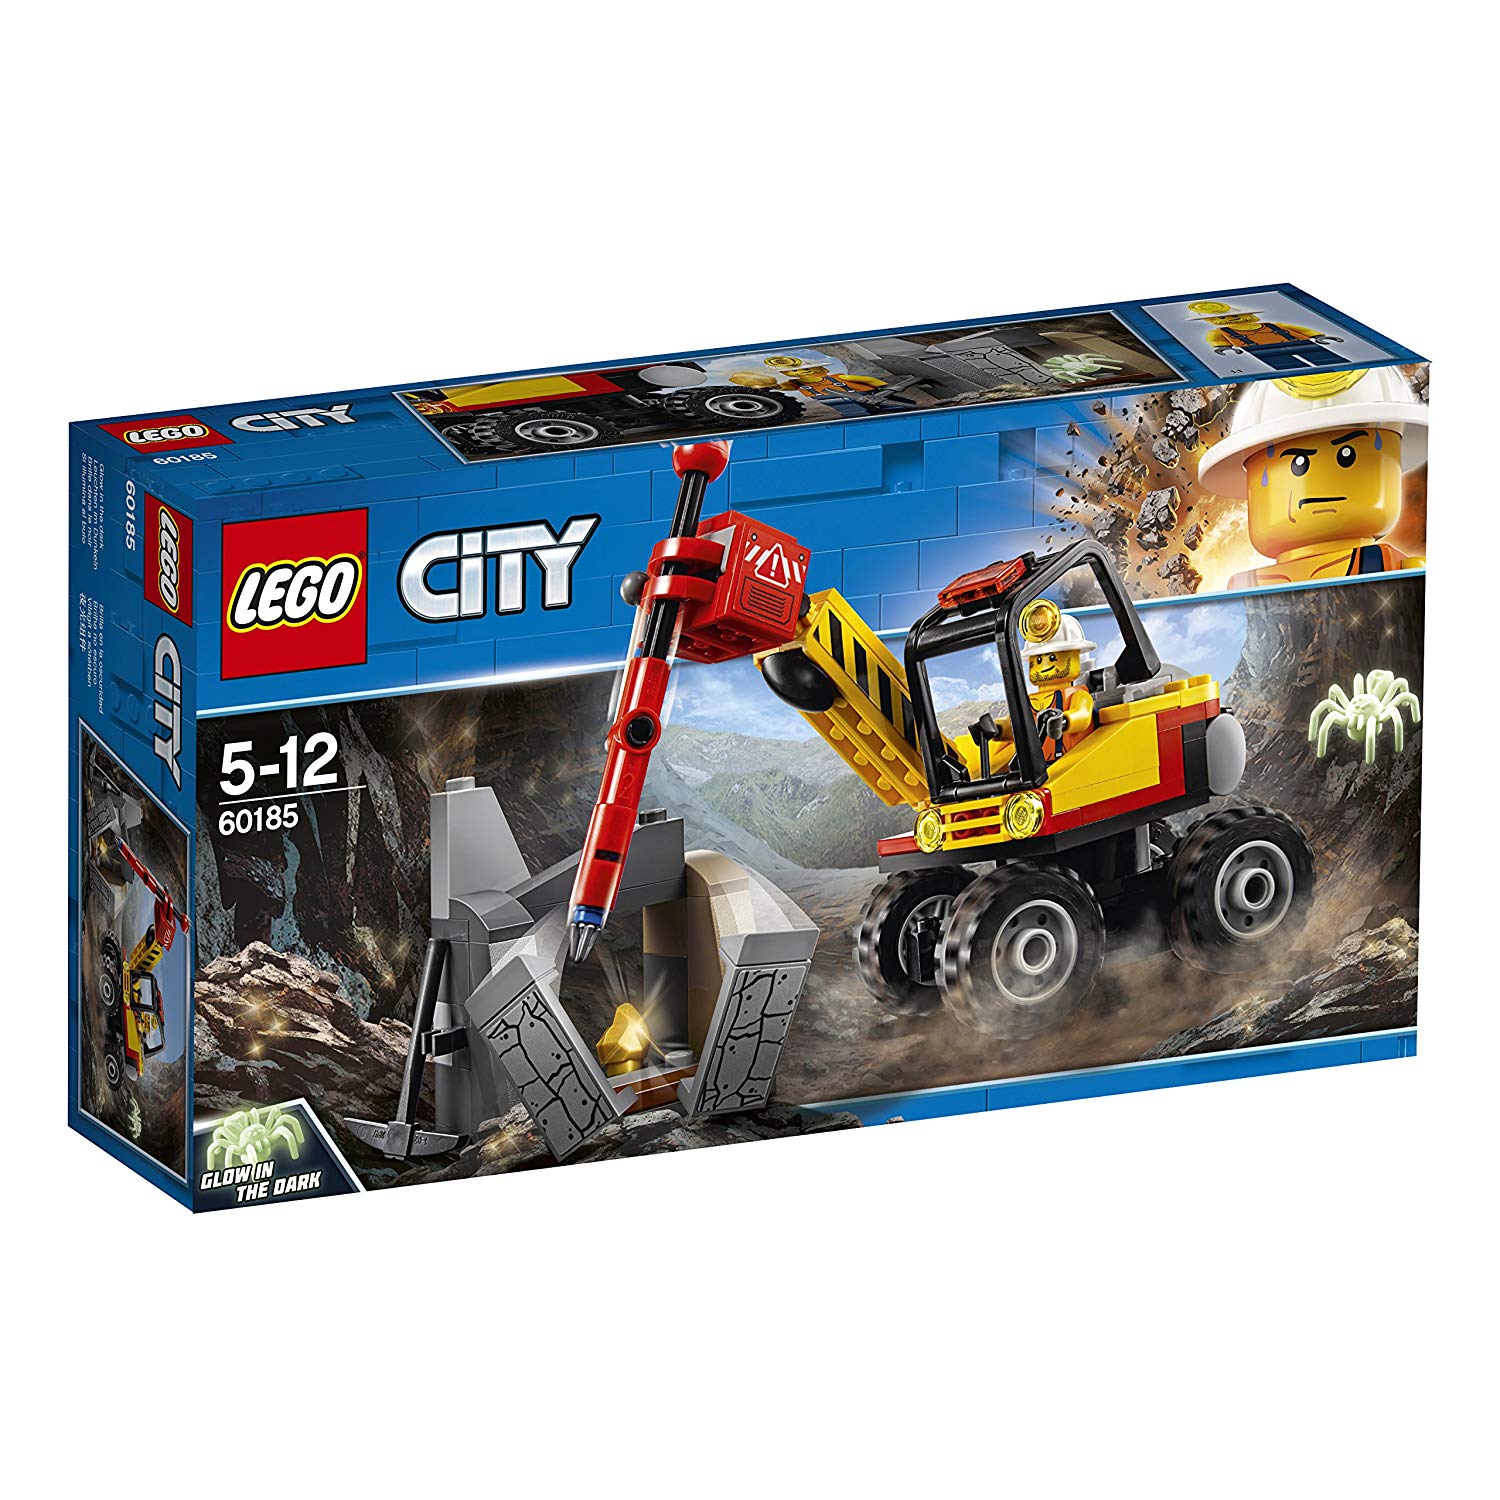 Lego Mining Professionals Power Log Construction Toy